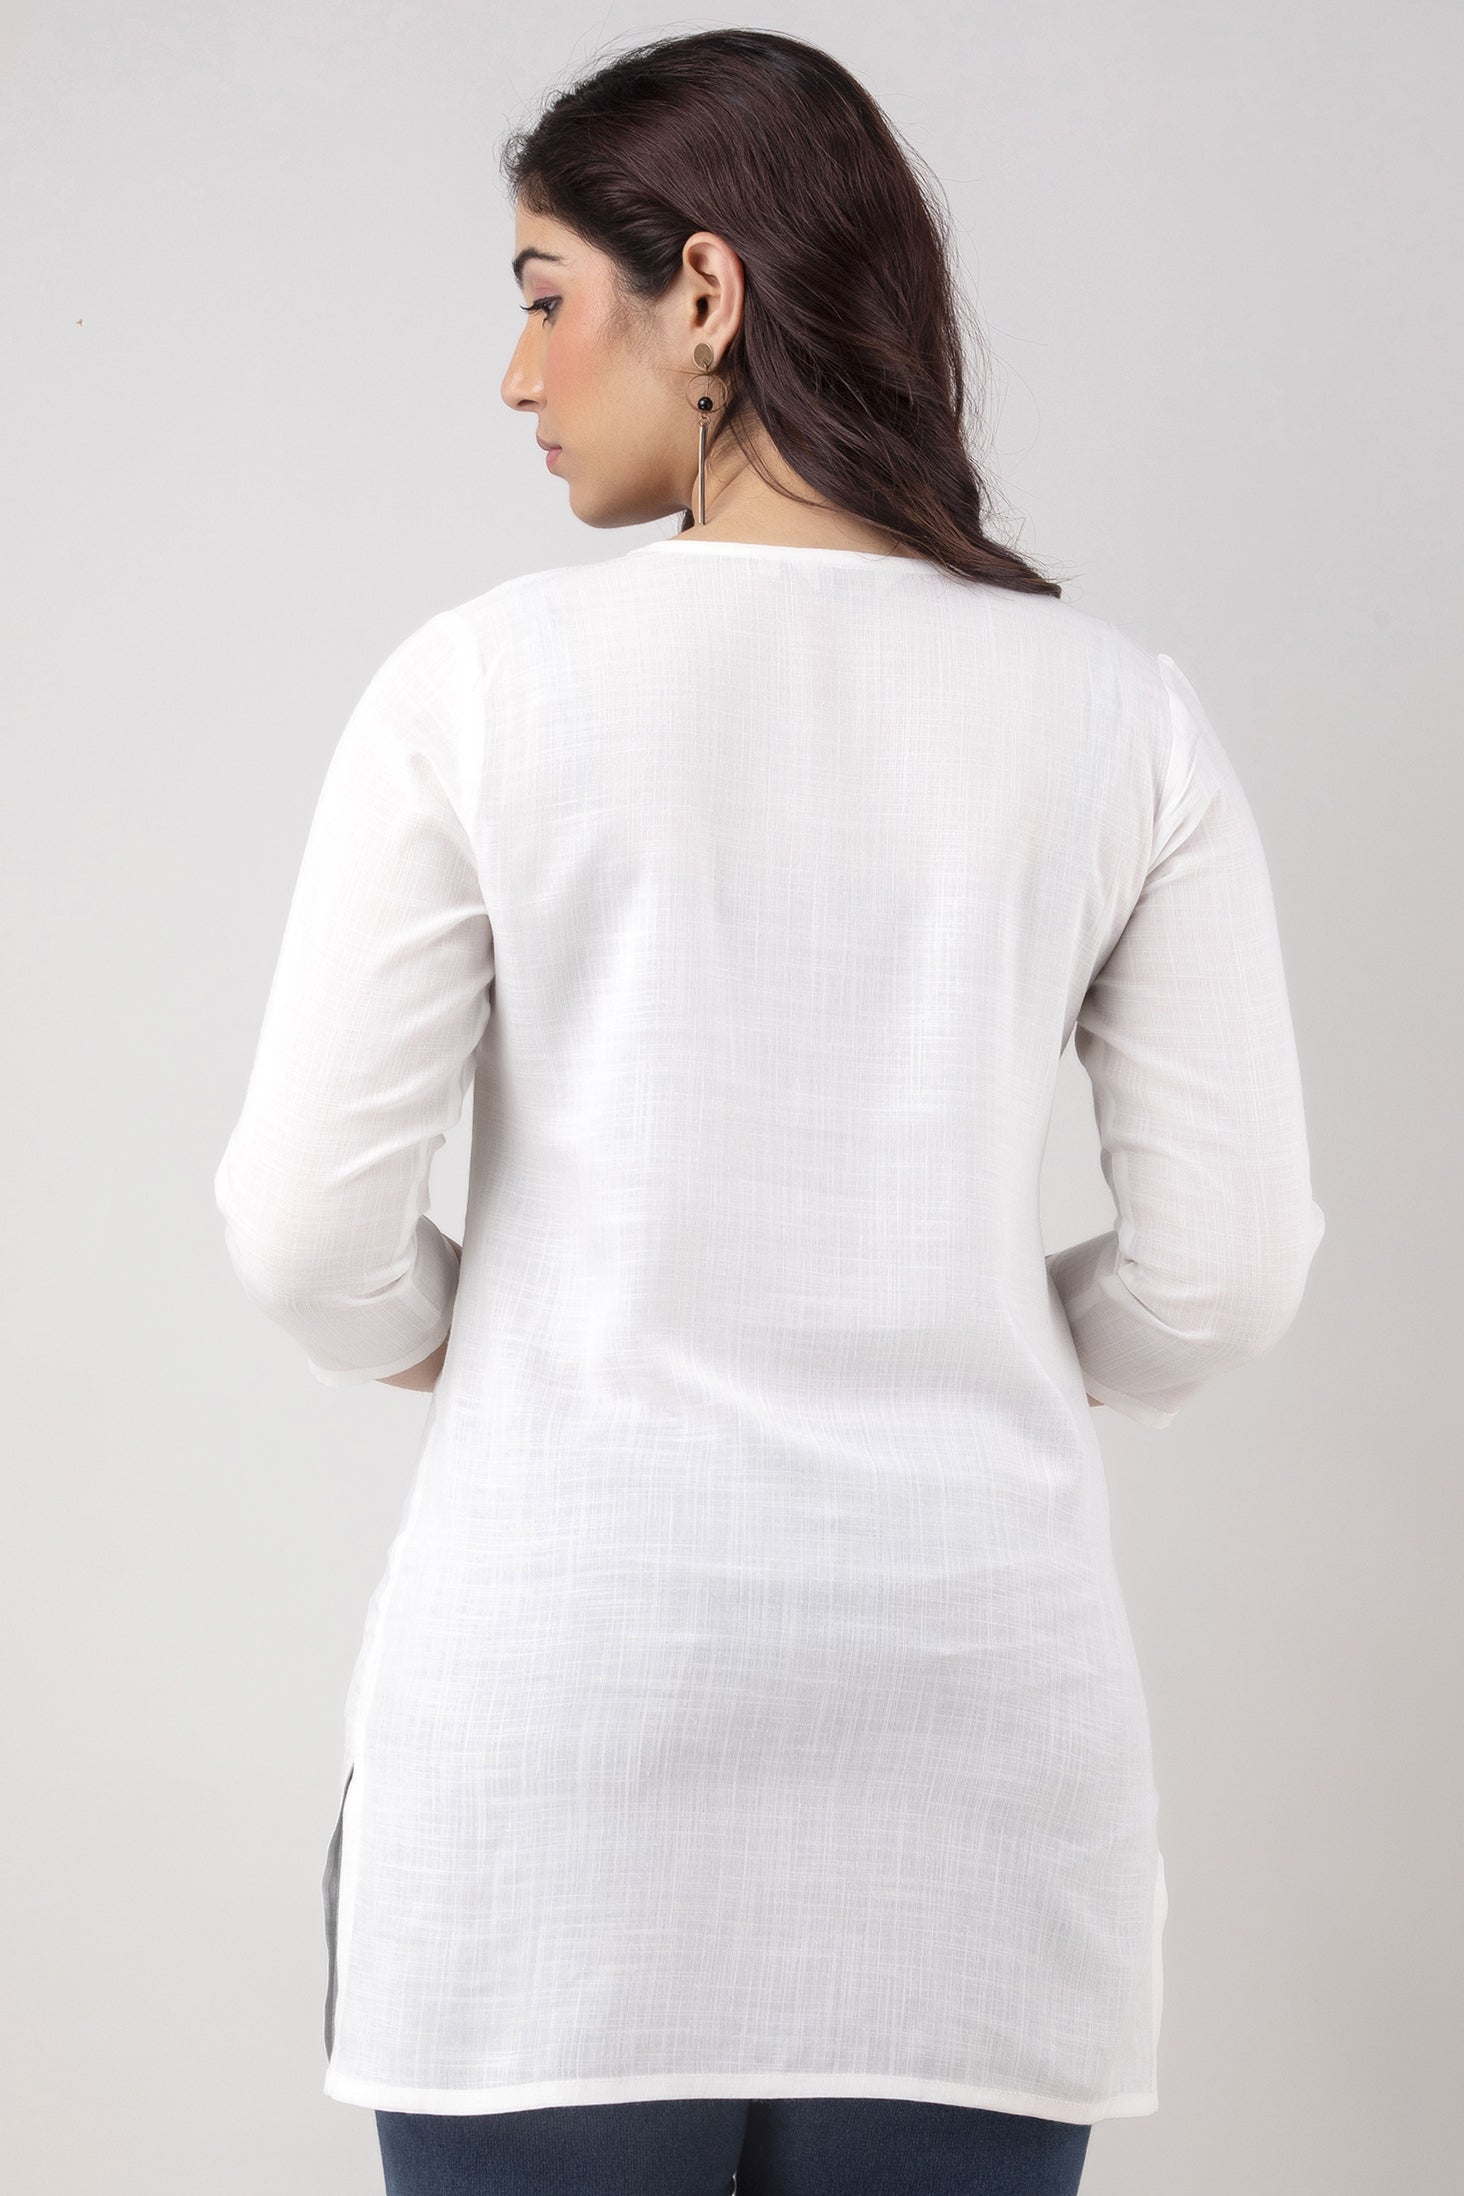 Women's Embroidered Viscose Rayon Regular Top (White) - Charu